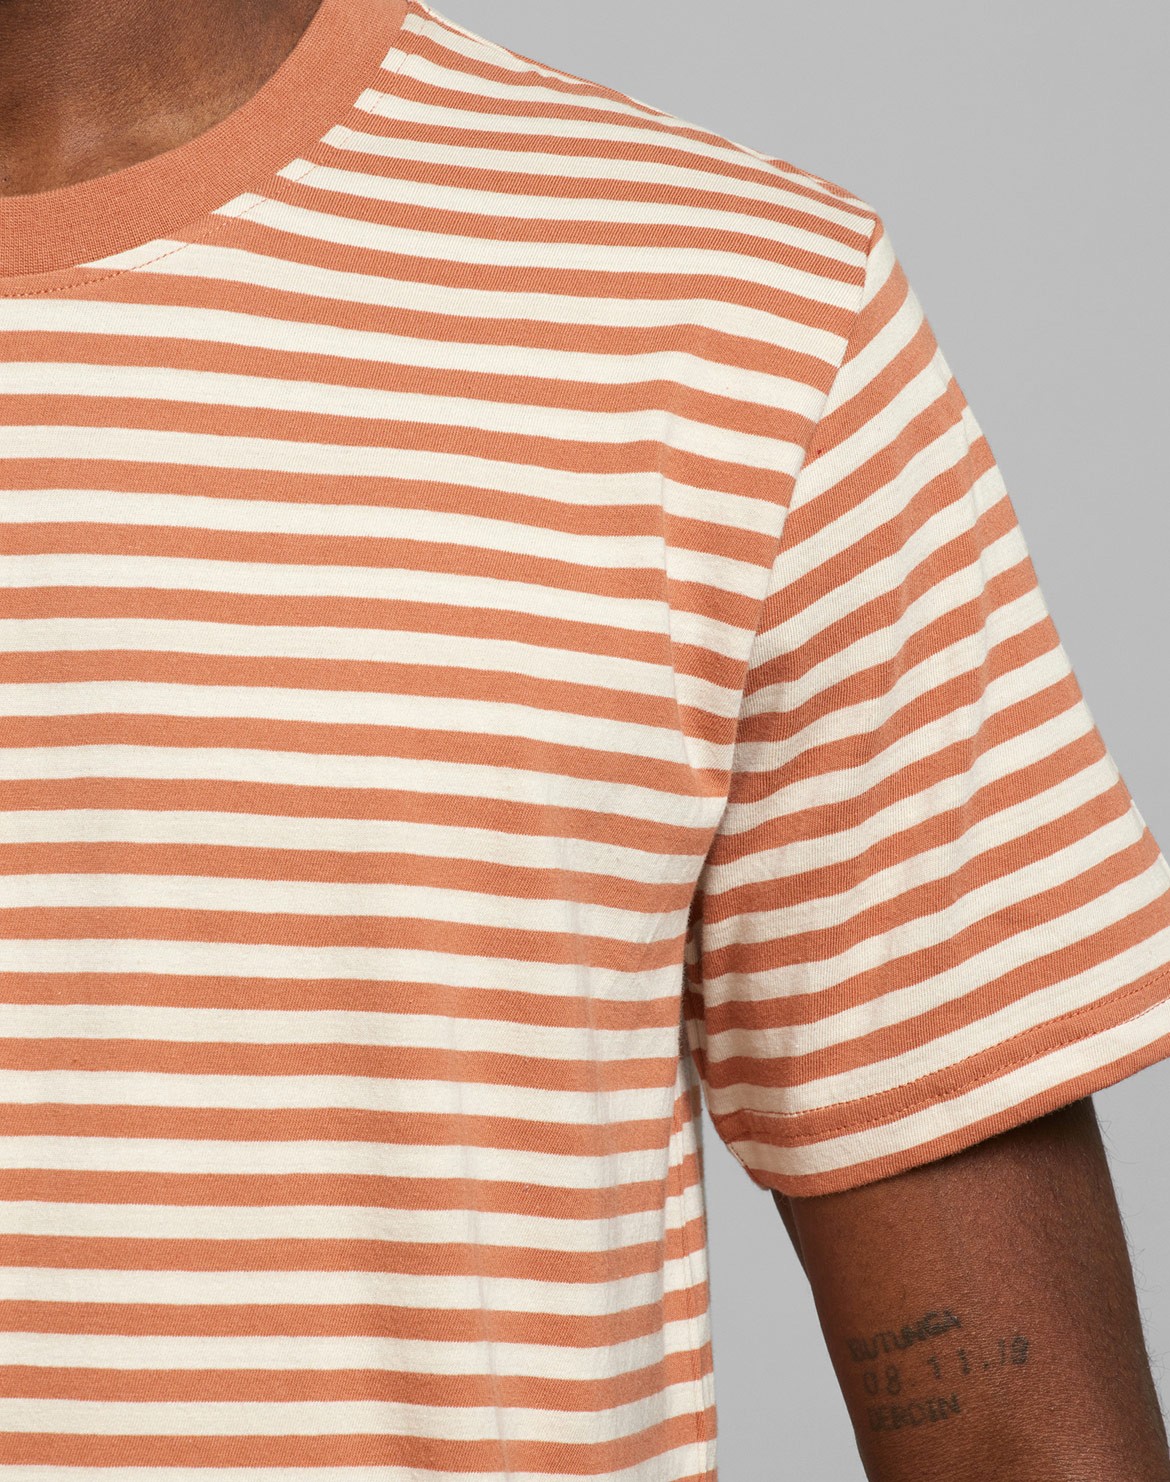 Stockholm Stripes T-Shirt